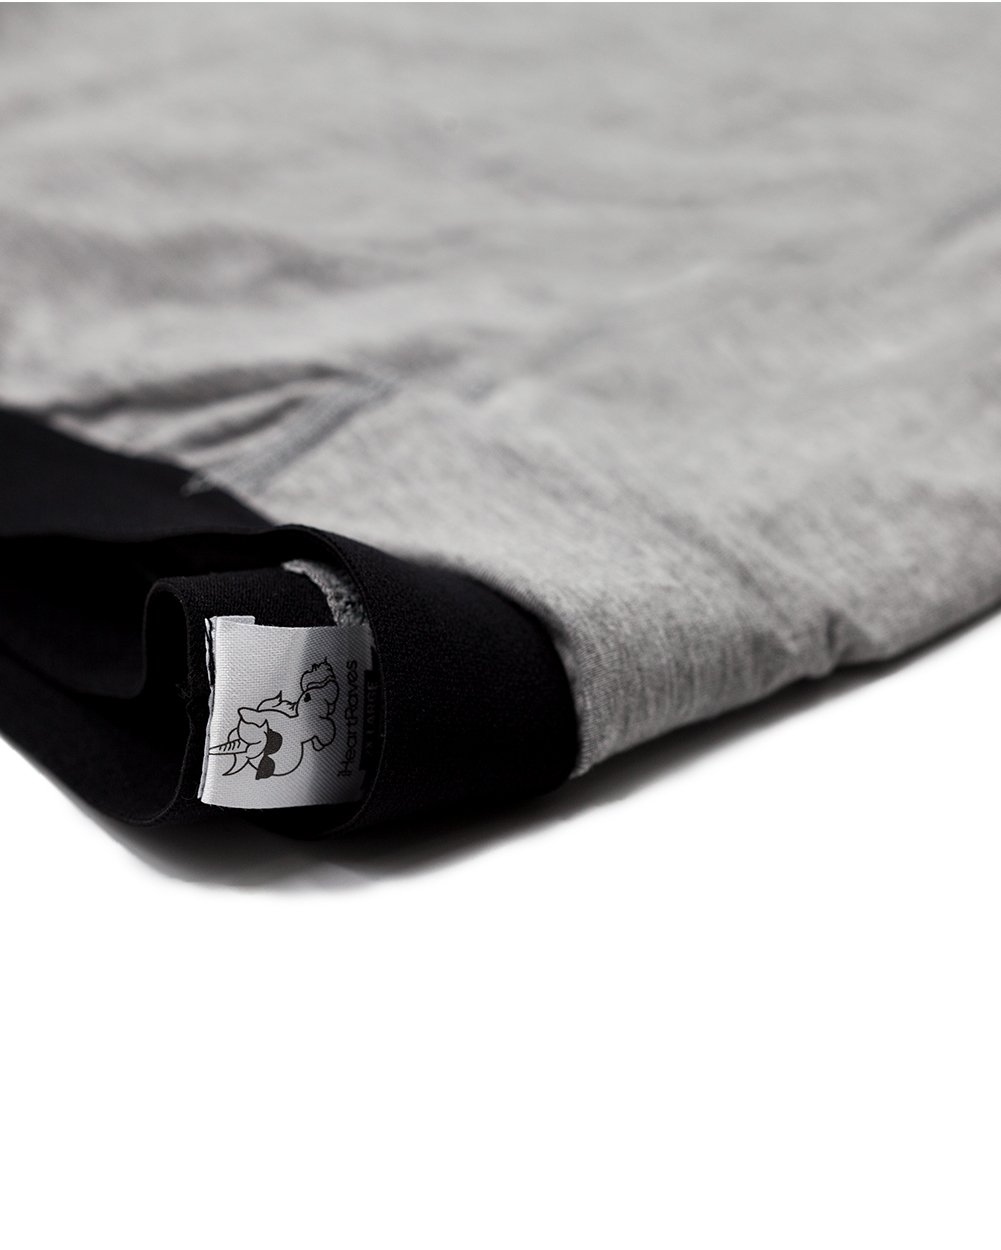 iHeartRaves Men's Boxer Brief Pocket Underwear (Black, Medium) 